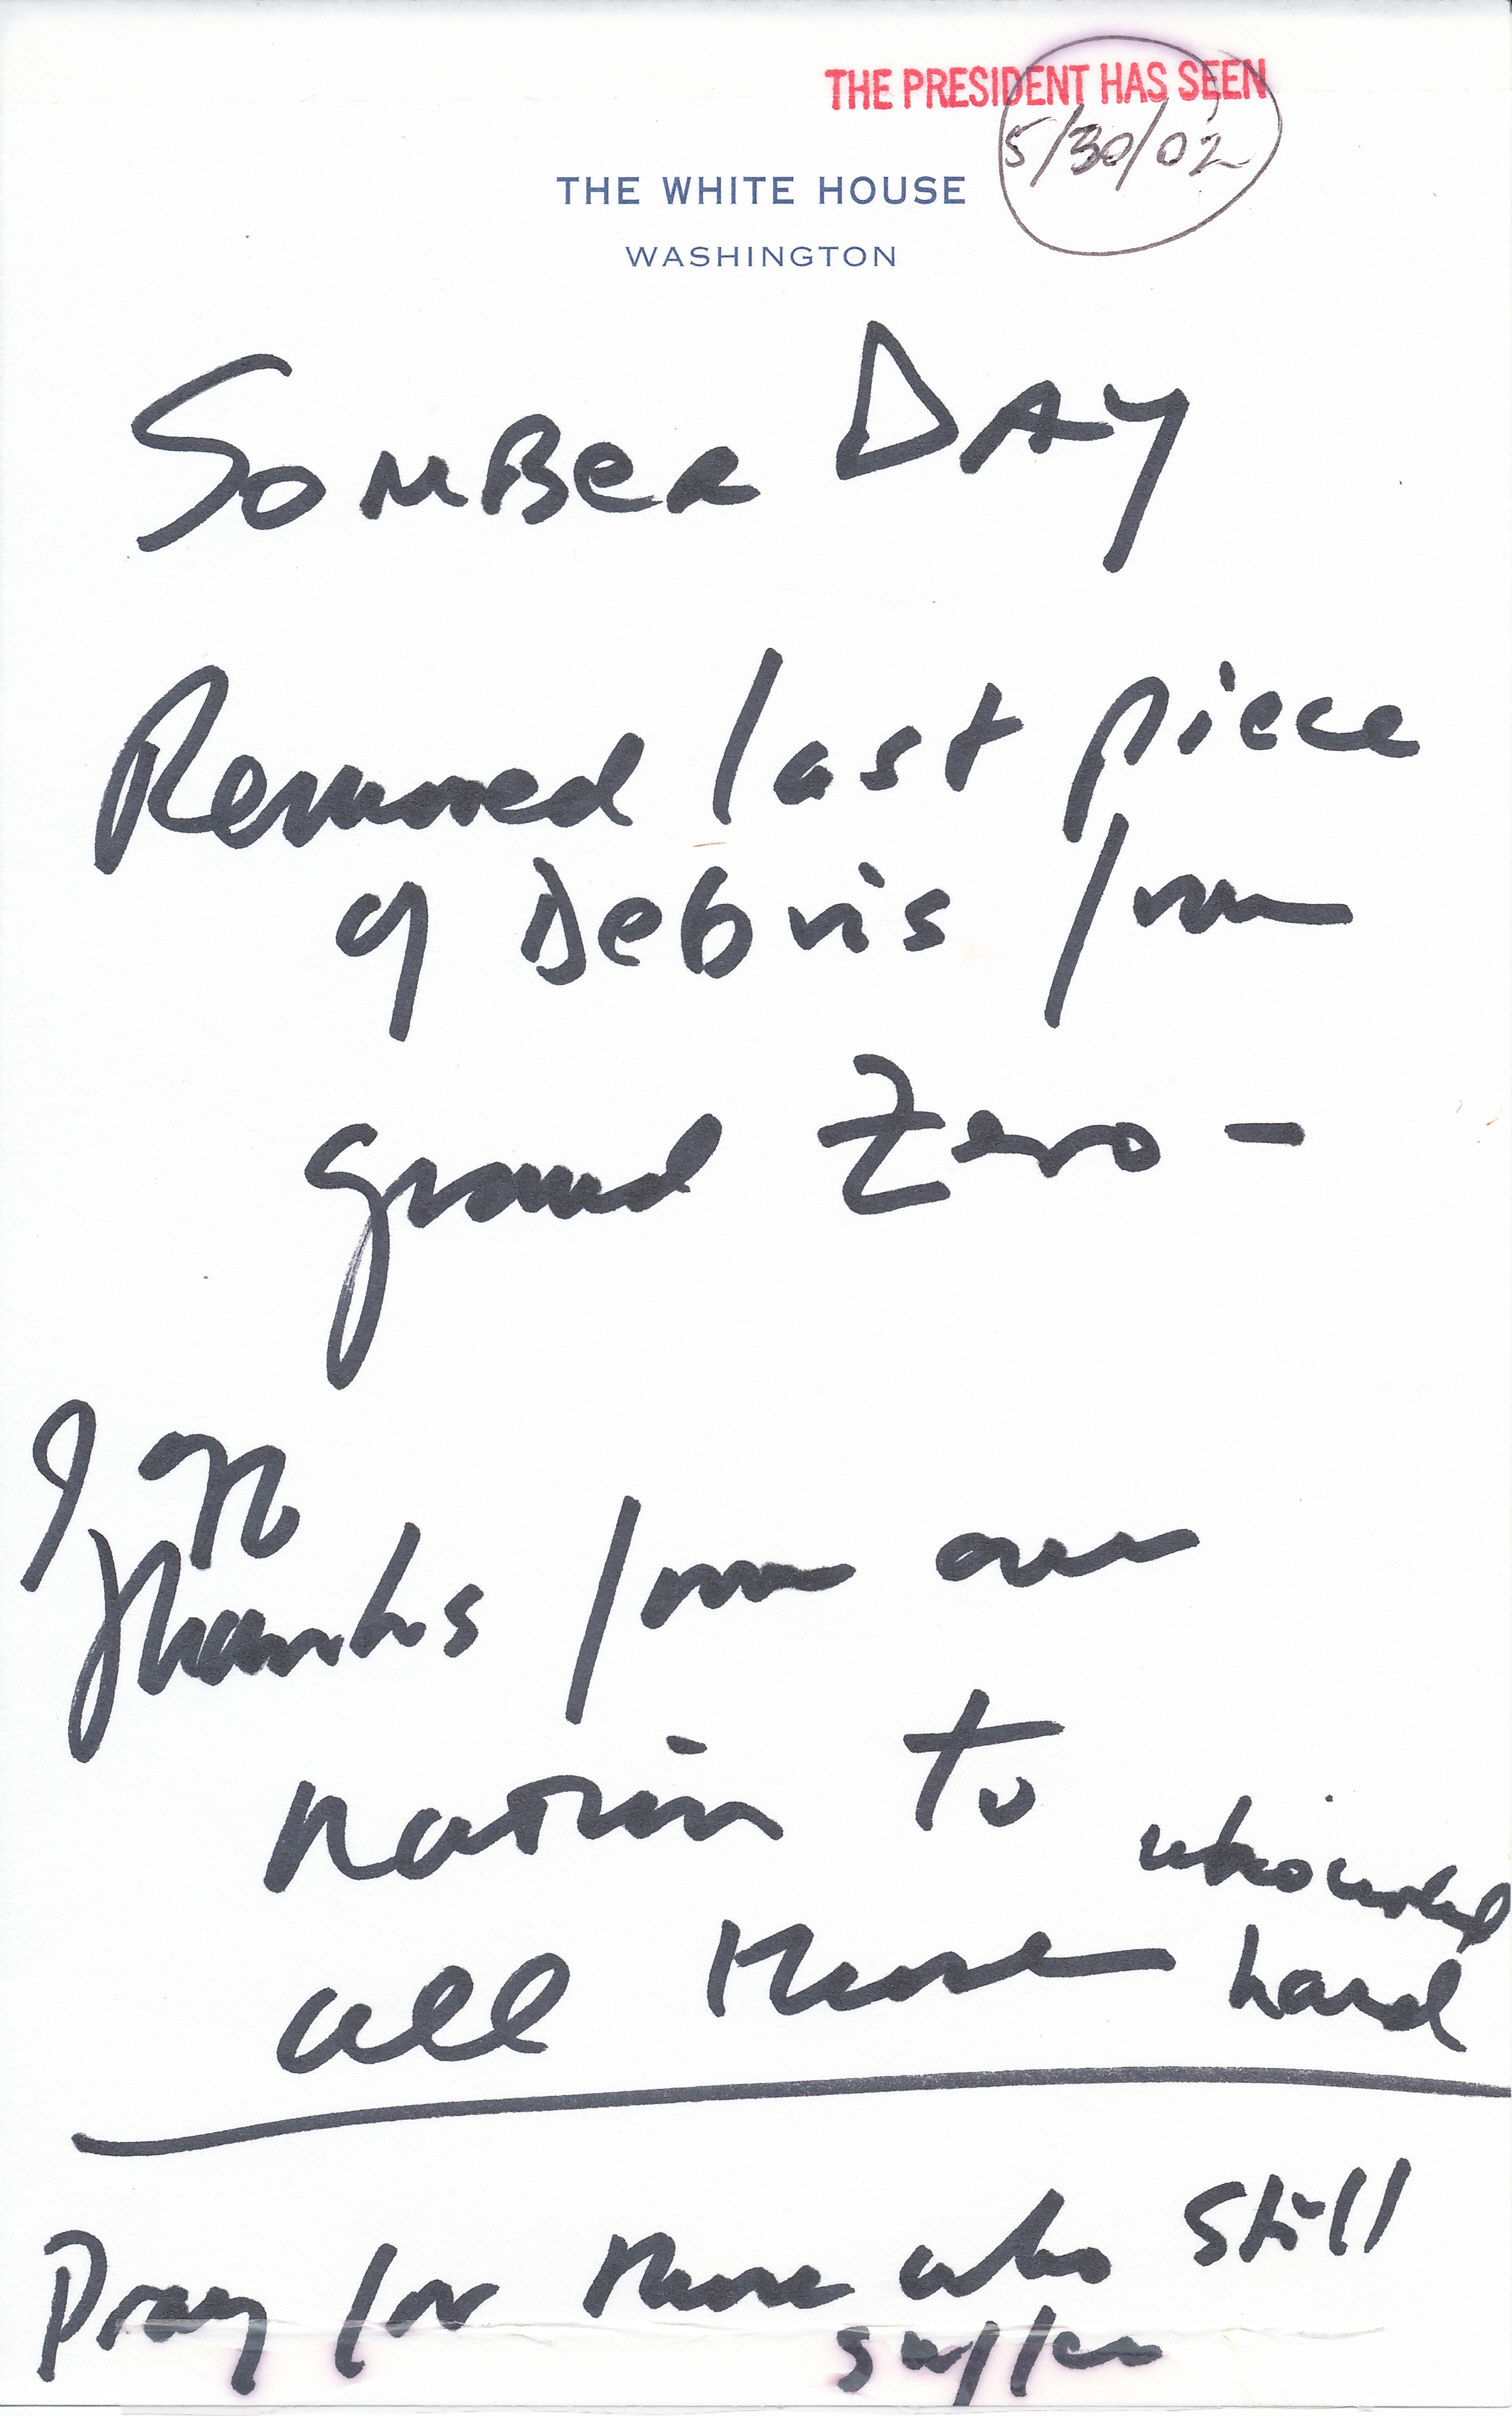 Handwritten notes from the President's Ground Zero Visit